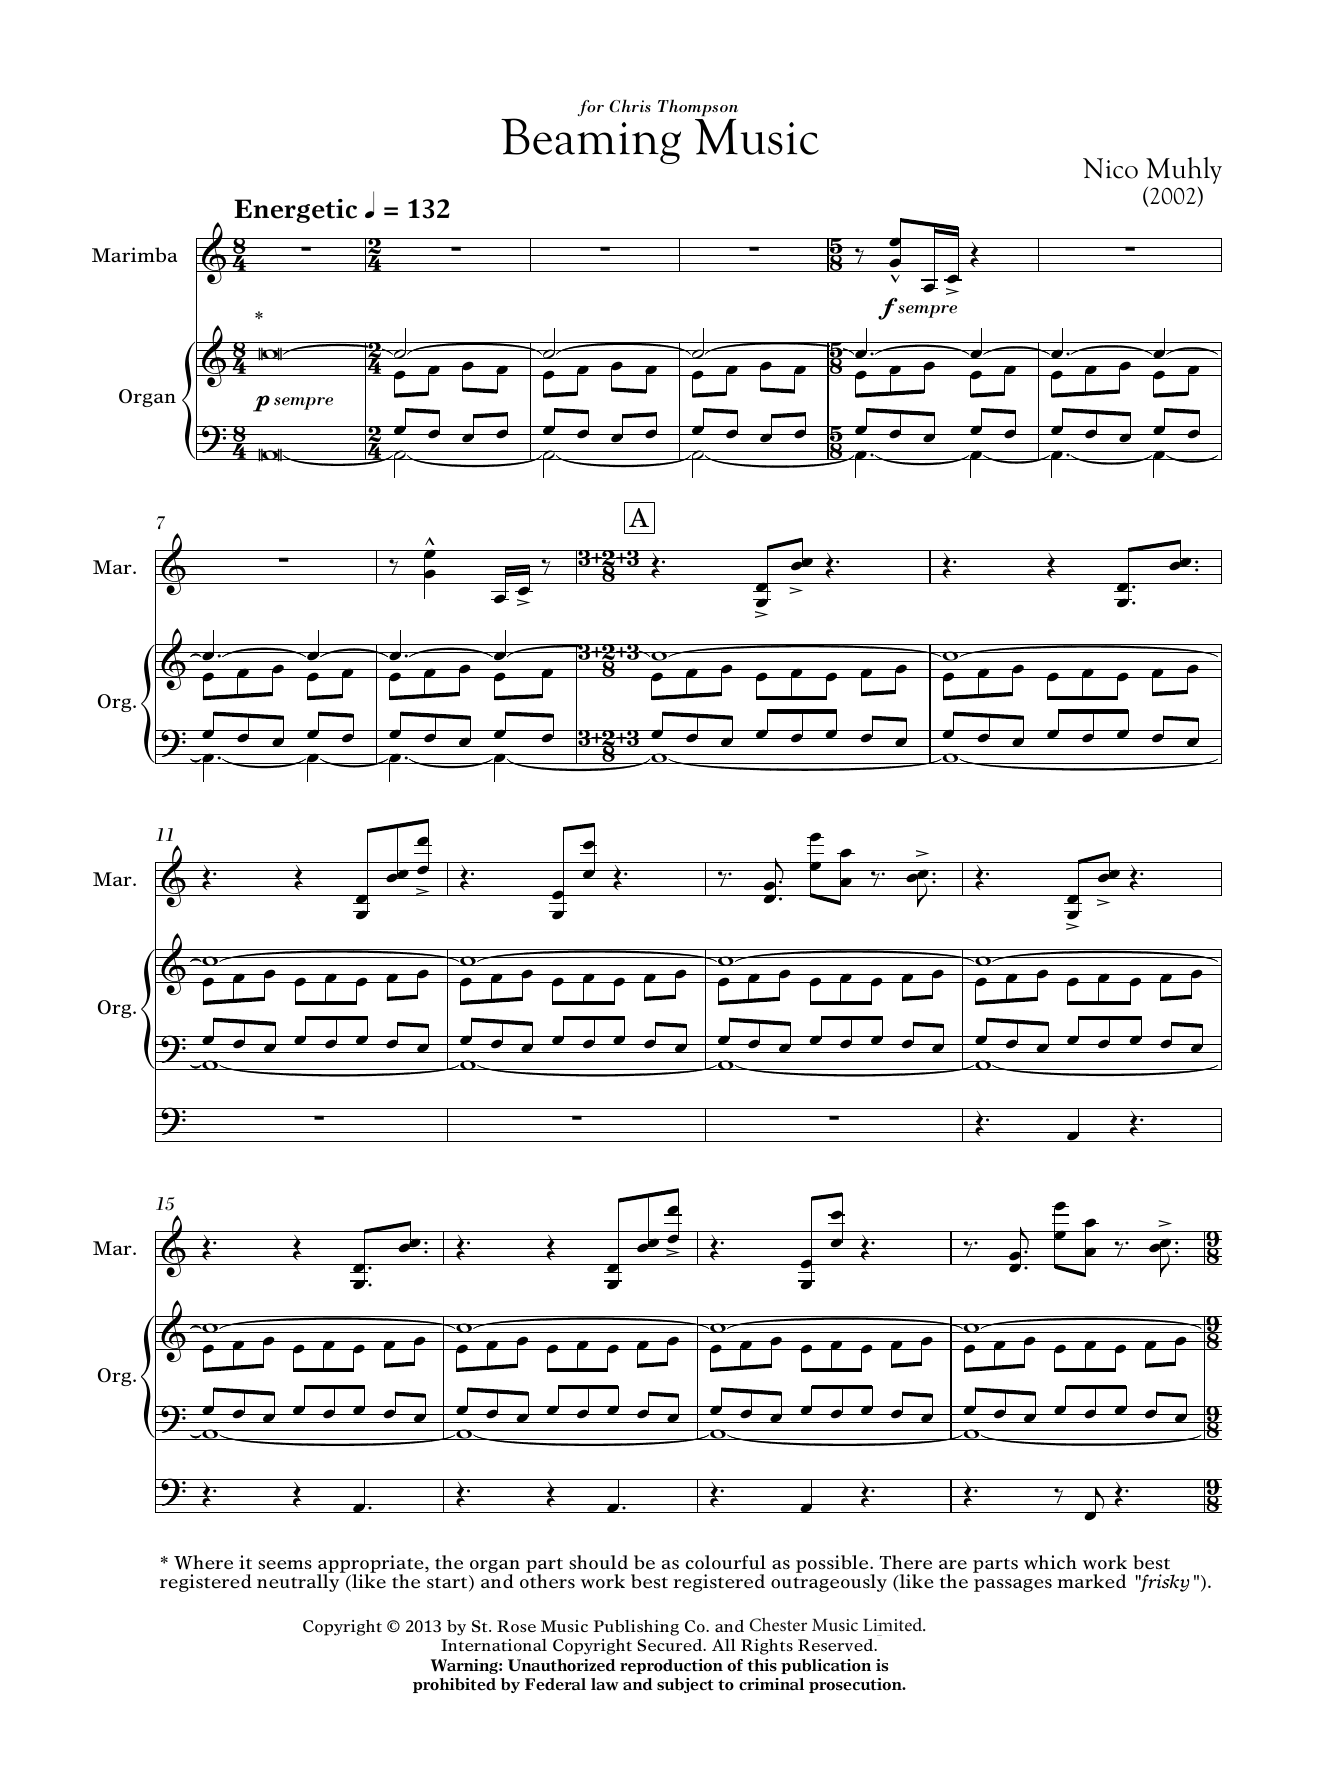 Nico Muhly Beaming Music (for Marimba and Organ) Sheet Music Notes & Chords for Marimba - Download or Print PDF